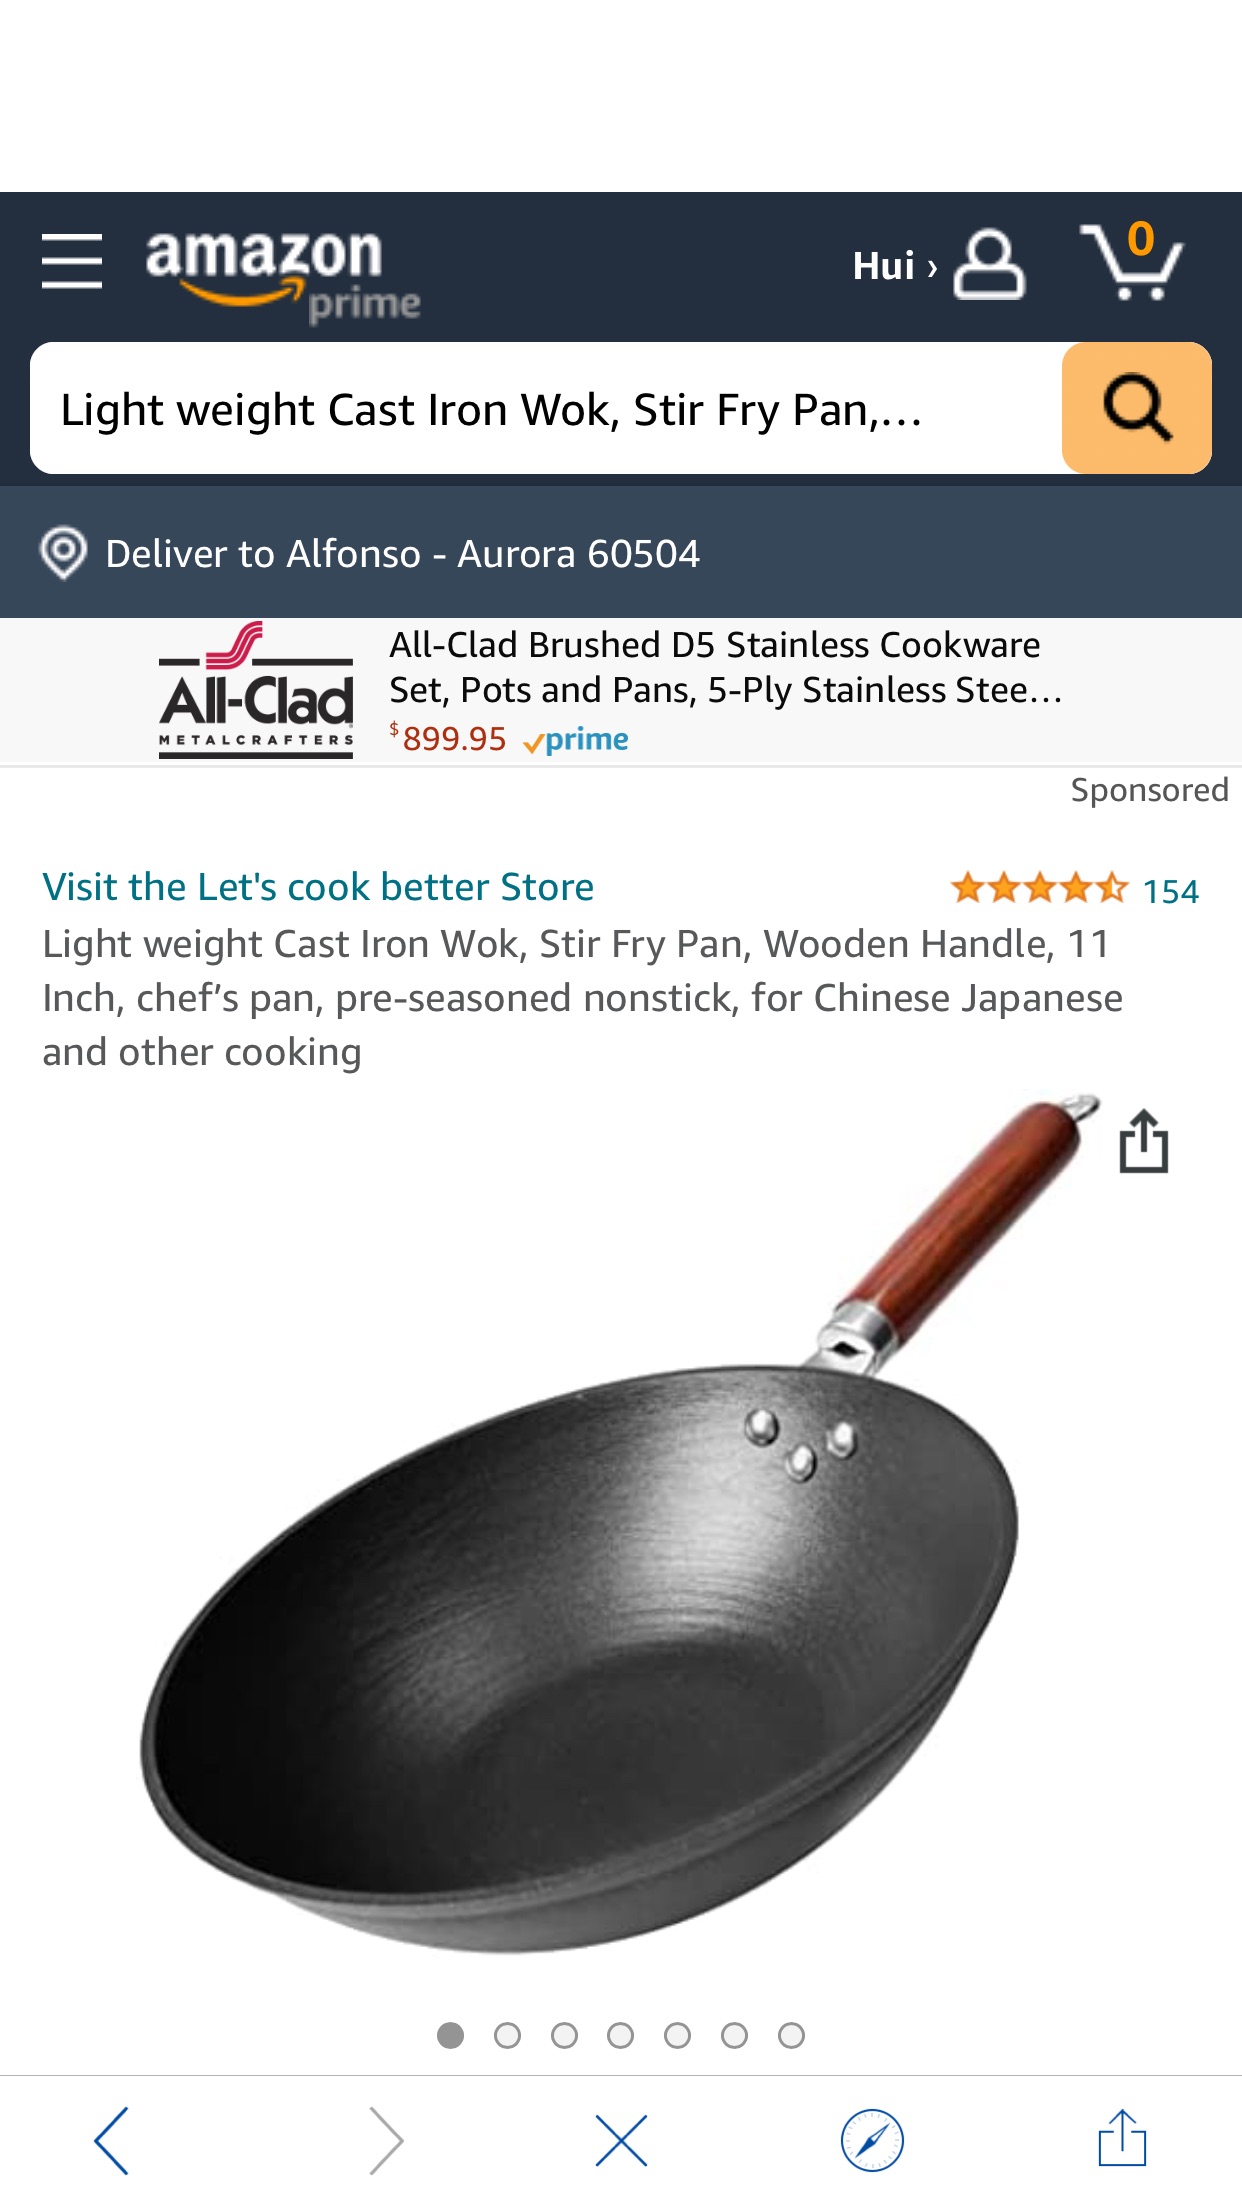 Amazon.com: Light weight Cast Iron Wok, Stir Fry Pan, Wooden Handle, 11 Inch炒菜铁锅百分之四十的折扣